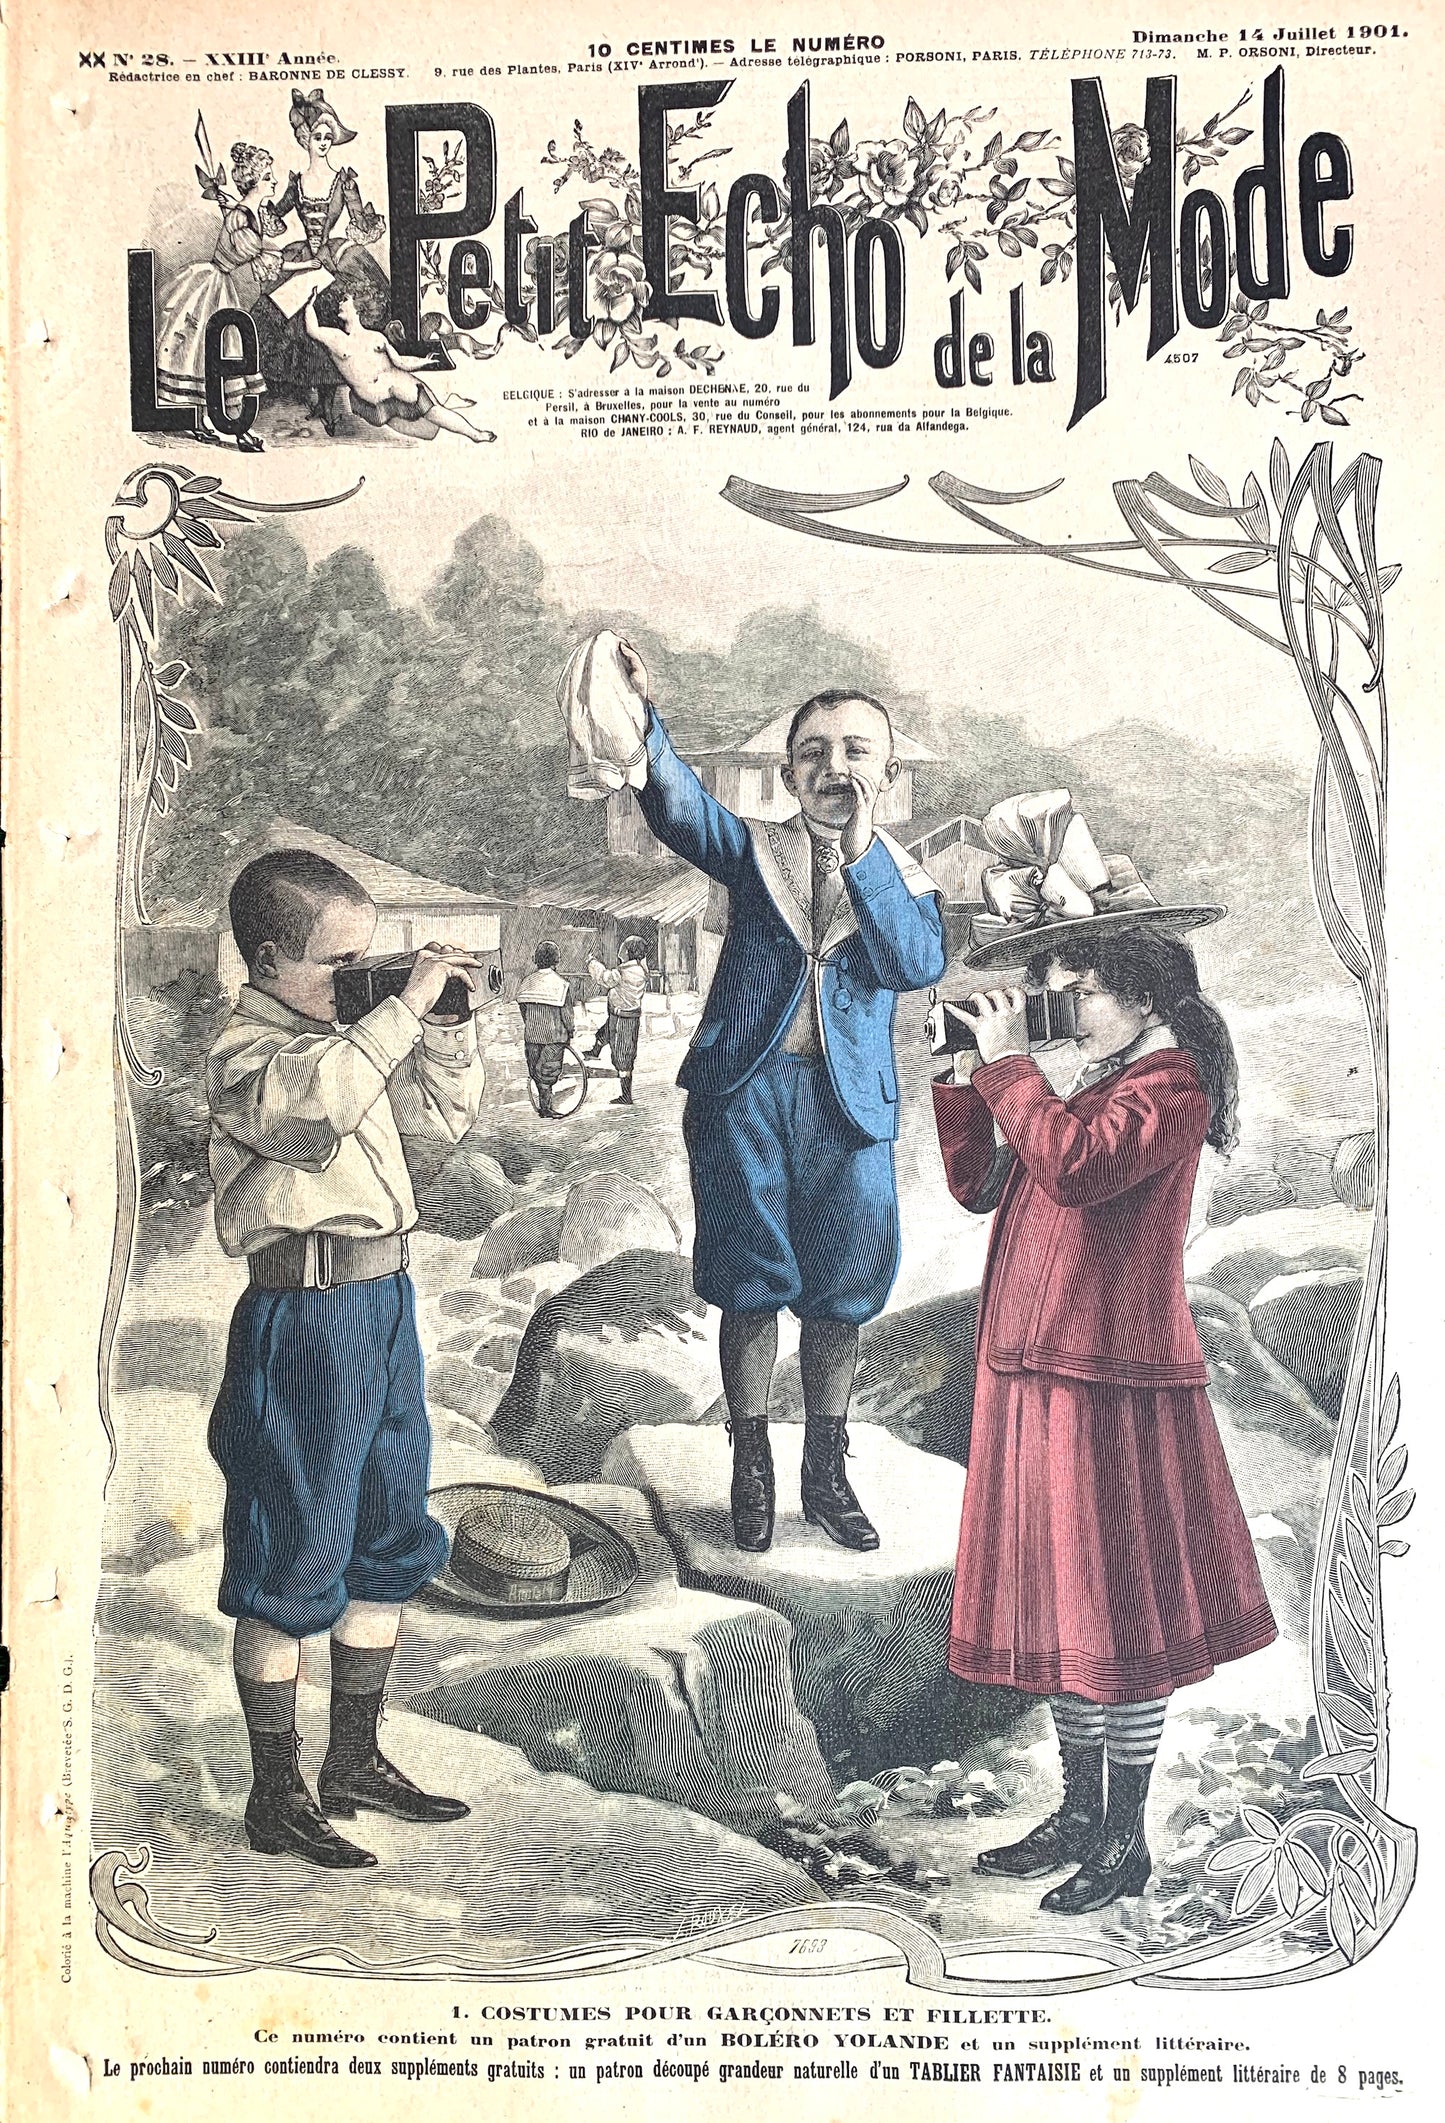 Cameras on Front Cover of July 1901 French Fashion Paper Le Petit Echo de la Mode